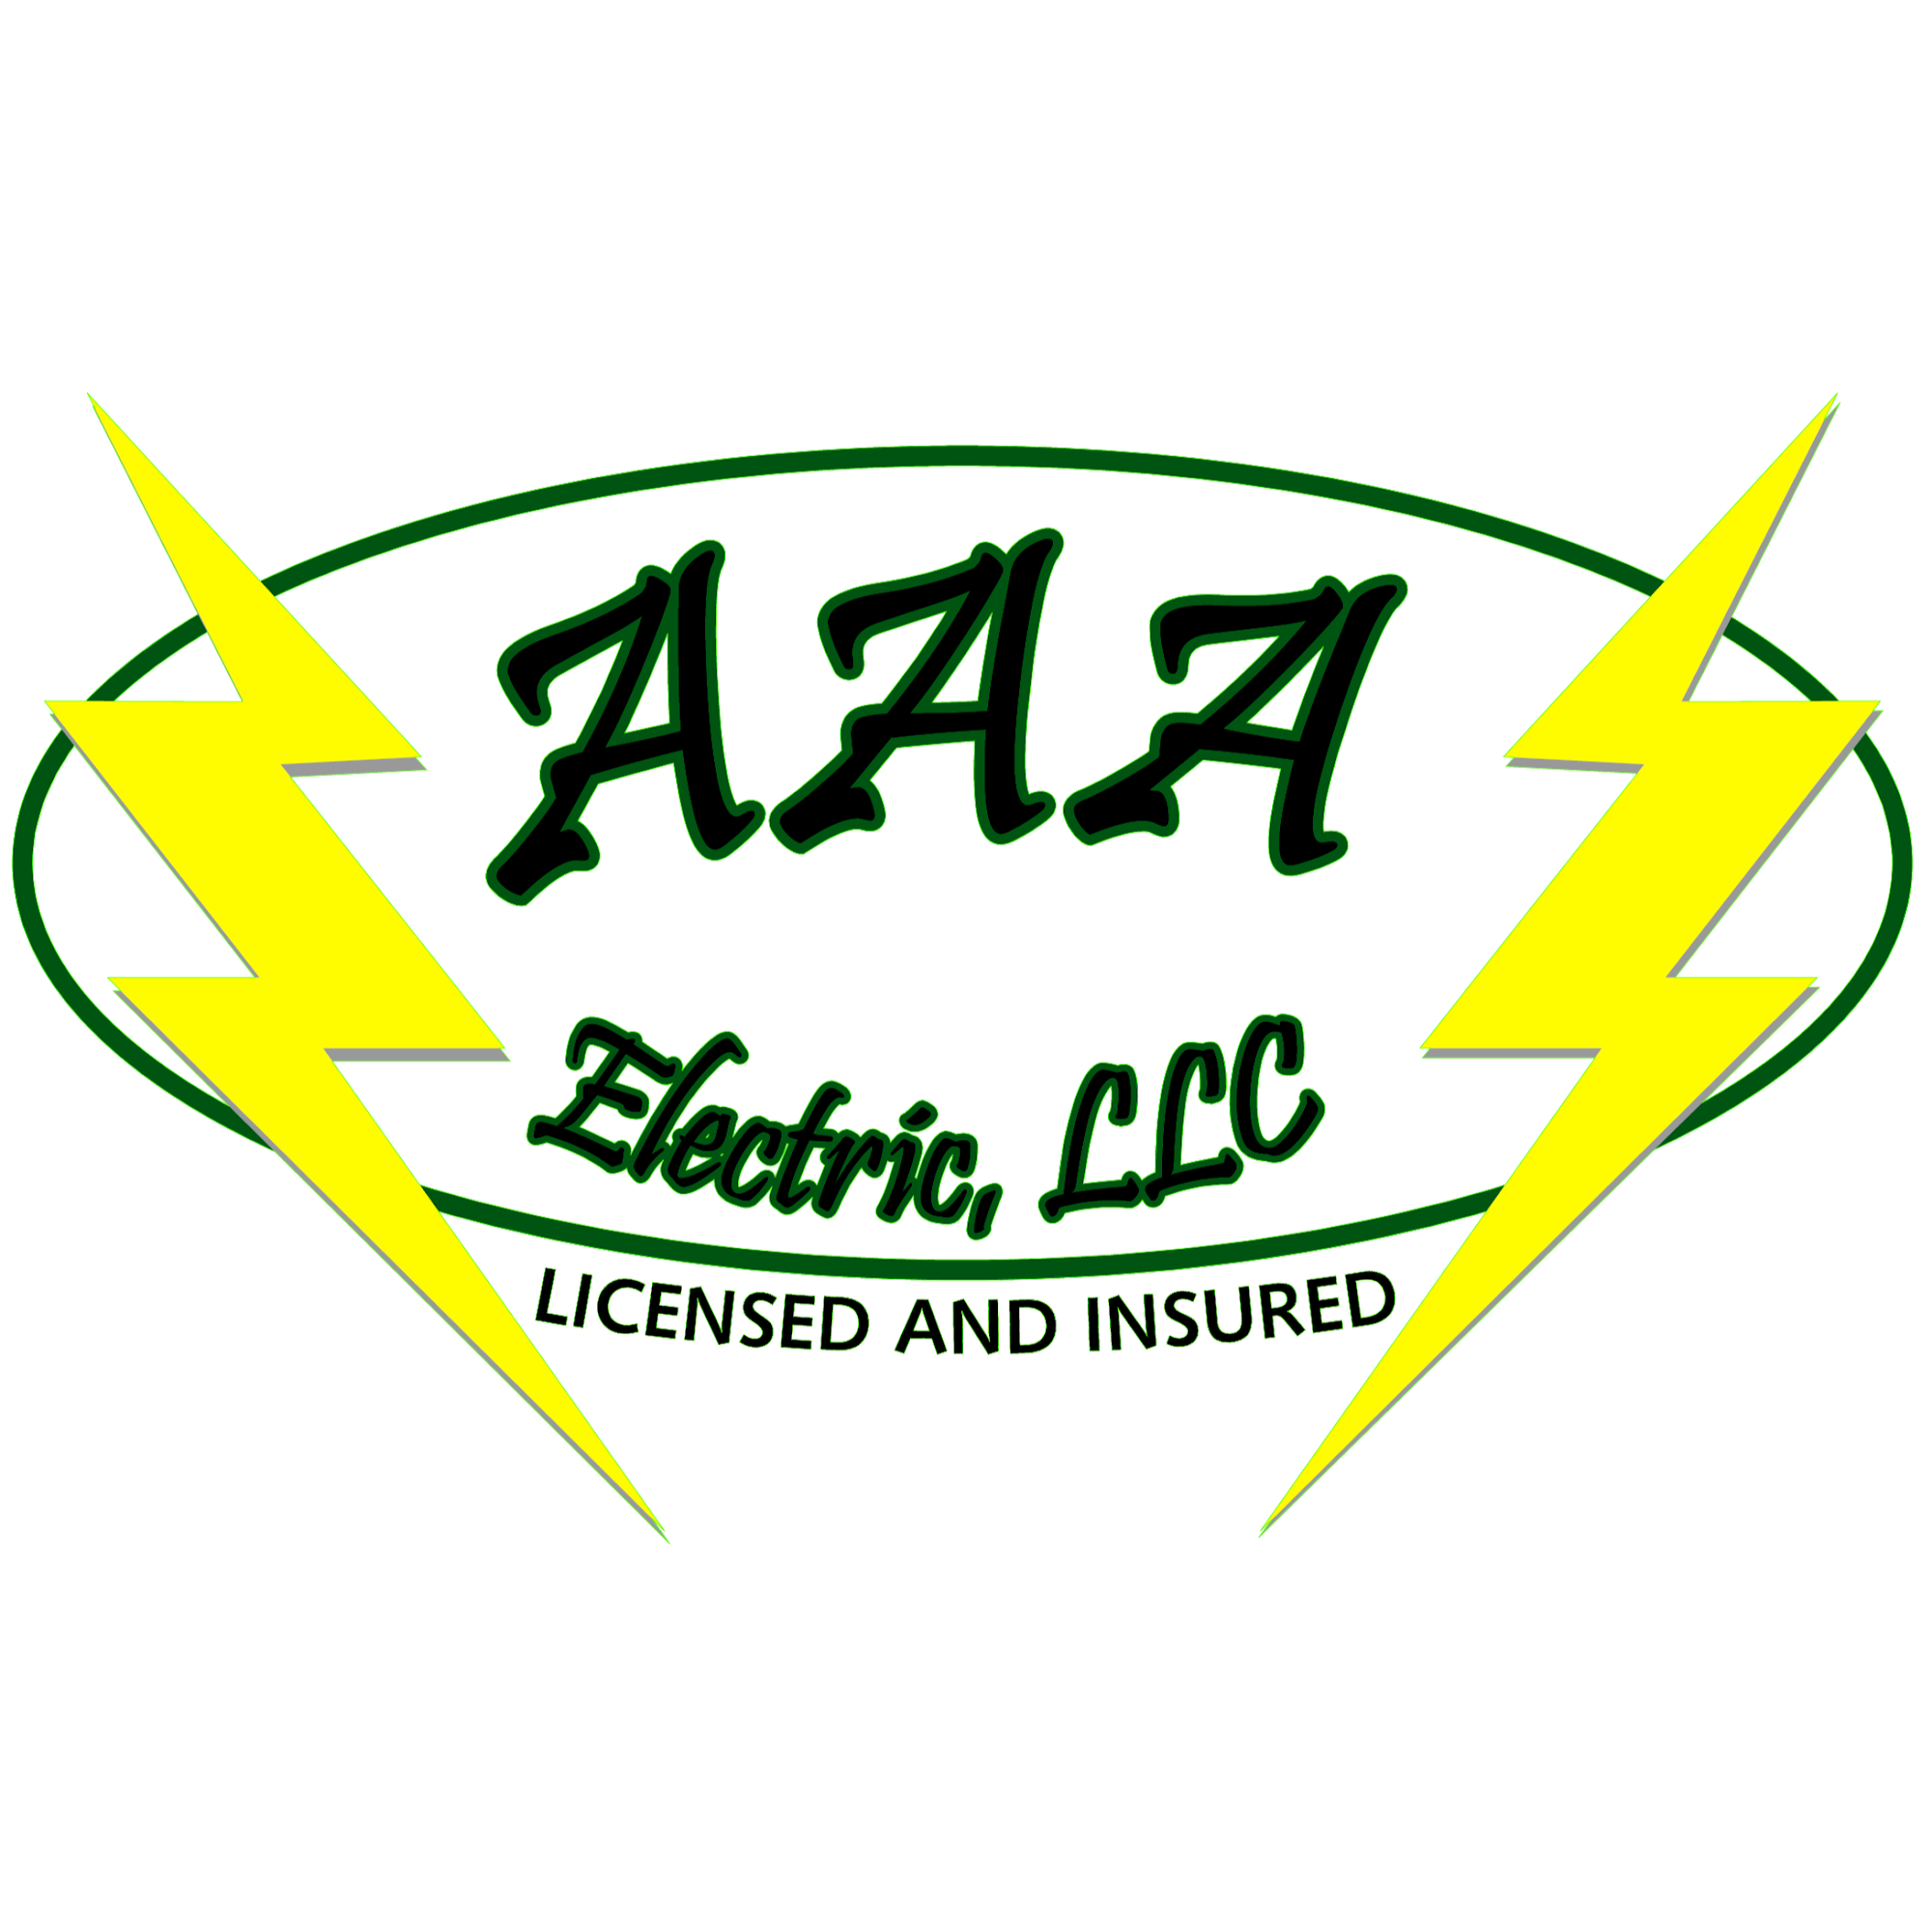 AAA Electric, LLC 2016 Jefferson Hwy, Fishersville Virginia 22939